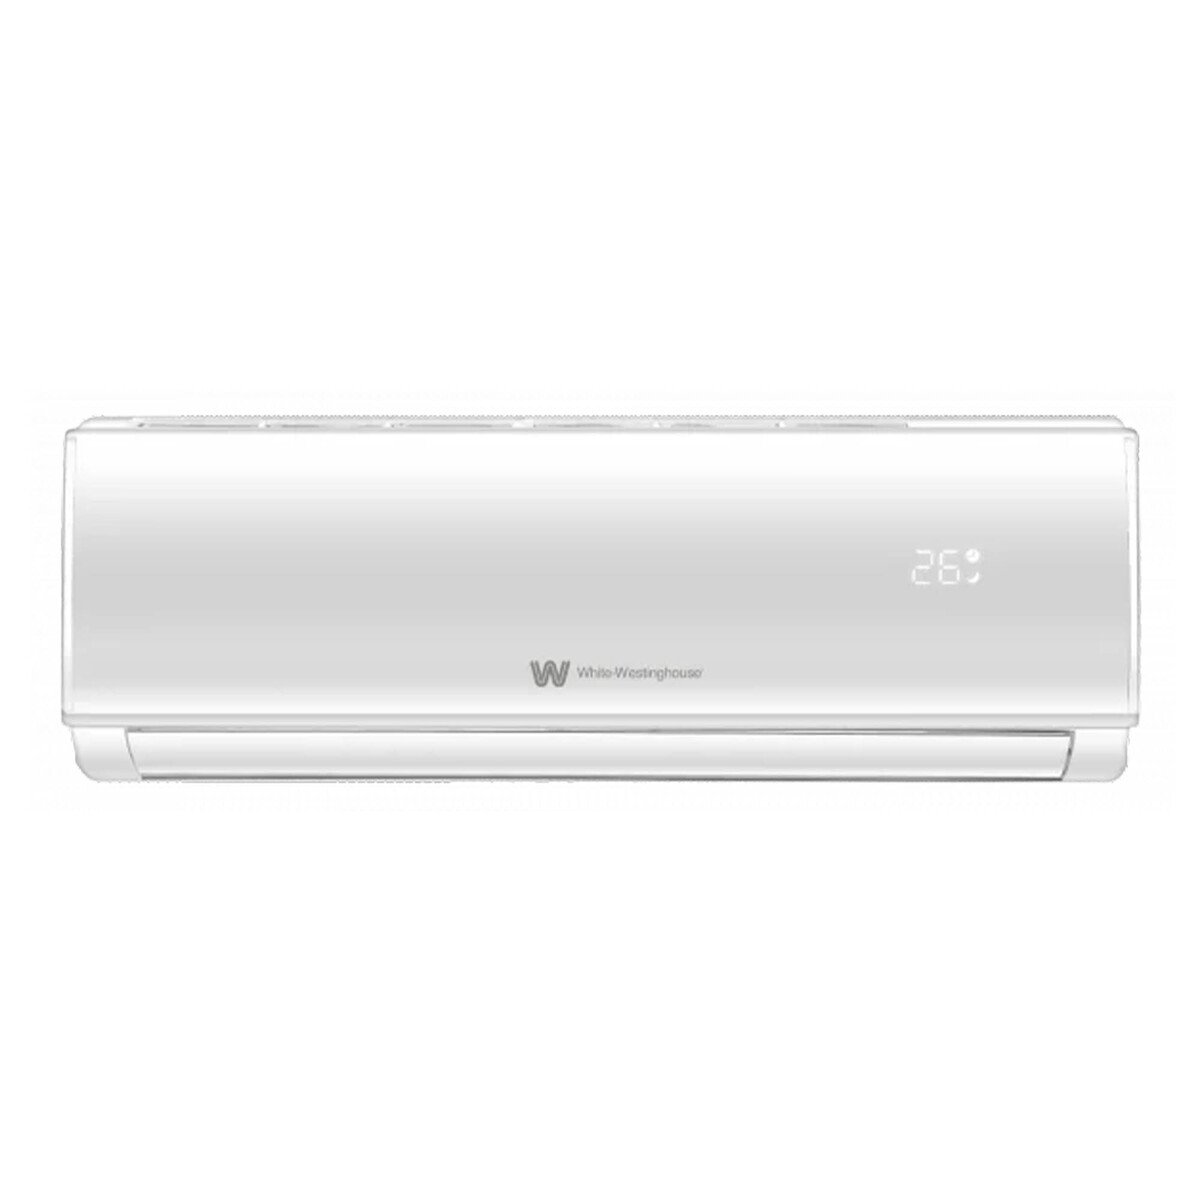 White Westing Hous Split Air Conditioner WWS24T22I 21000 BTU Cool